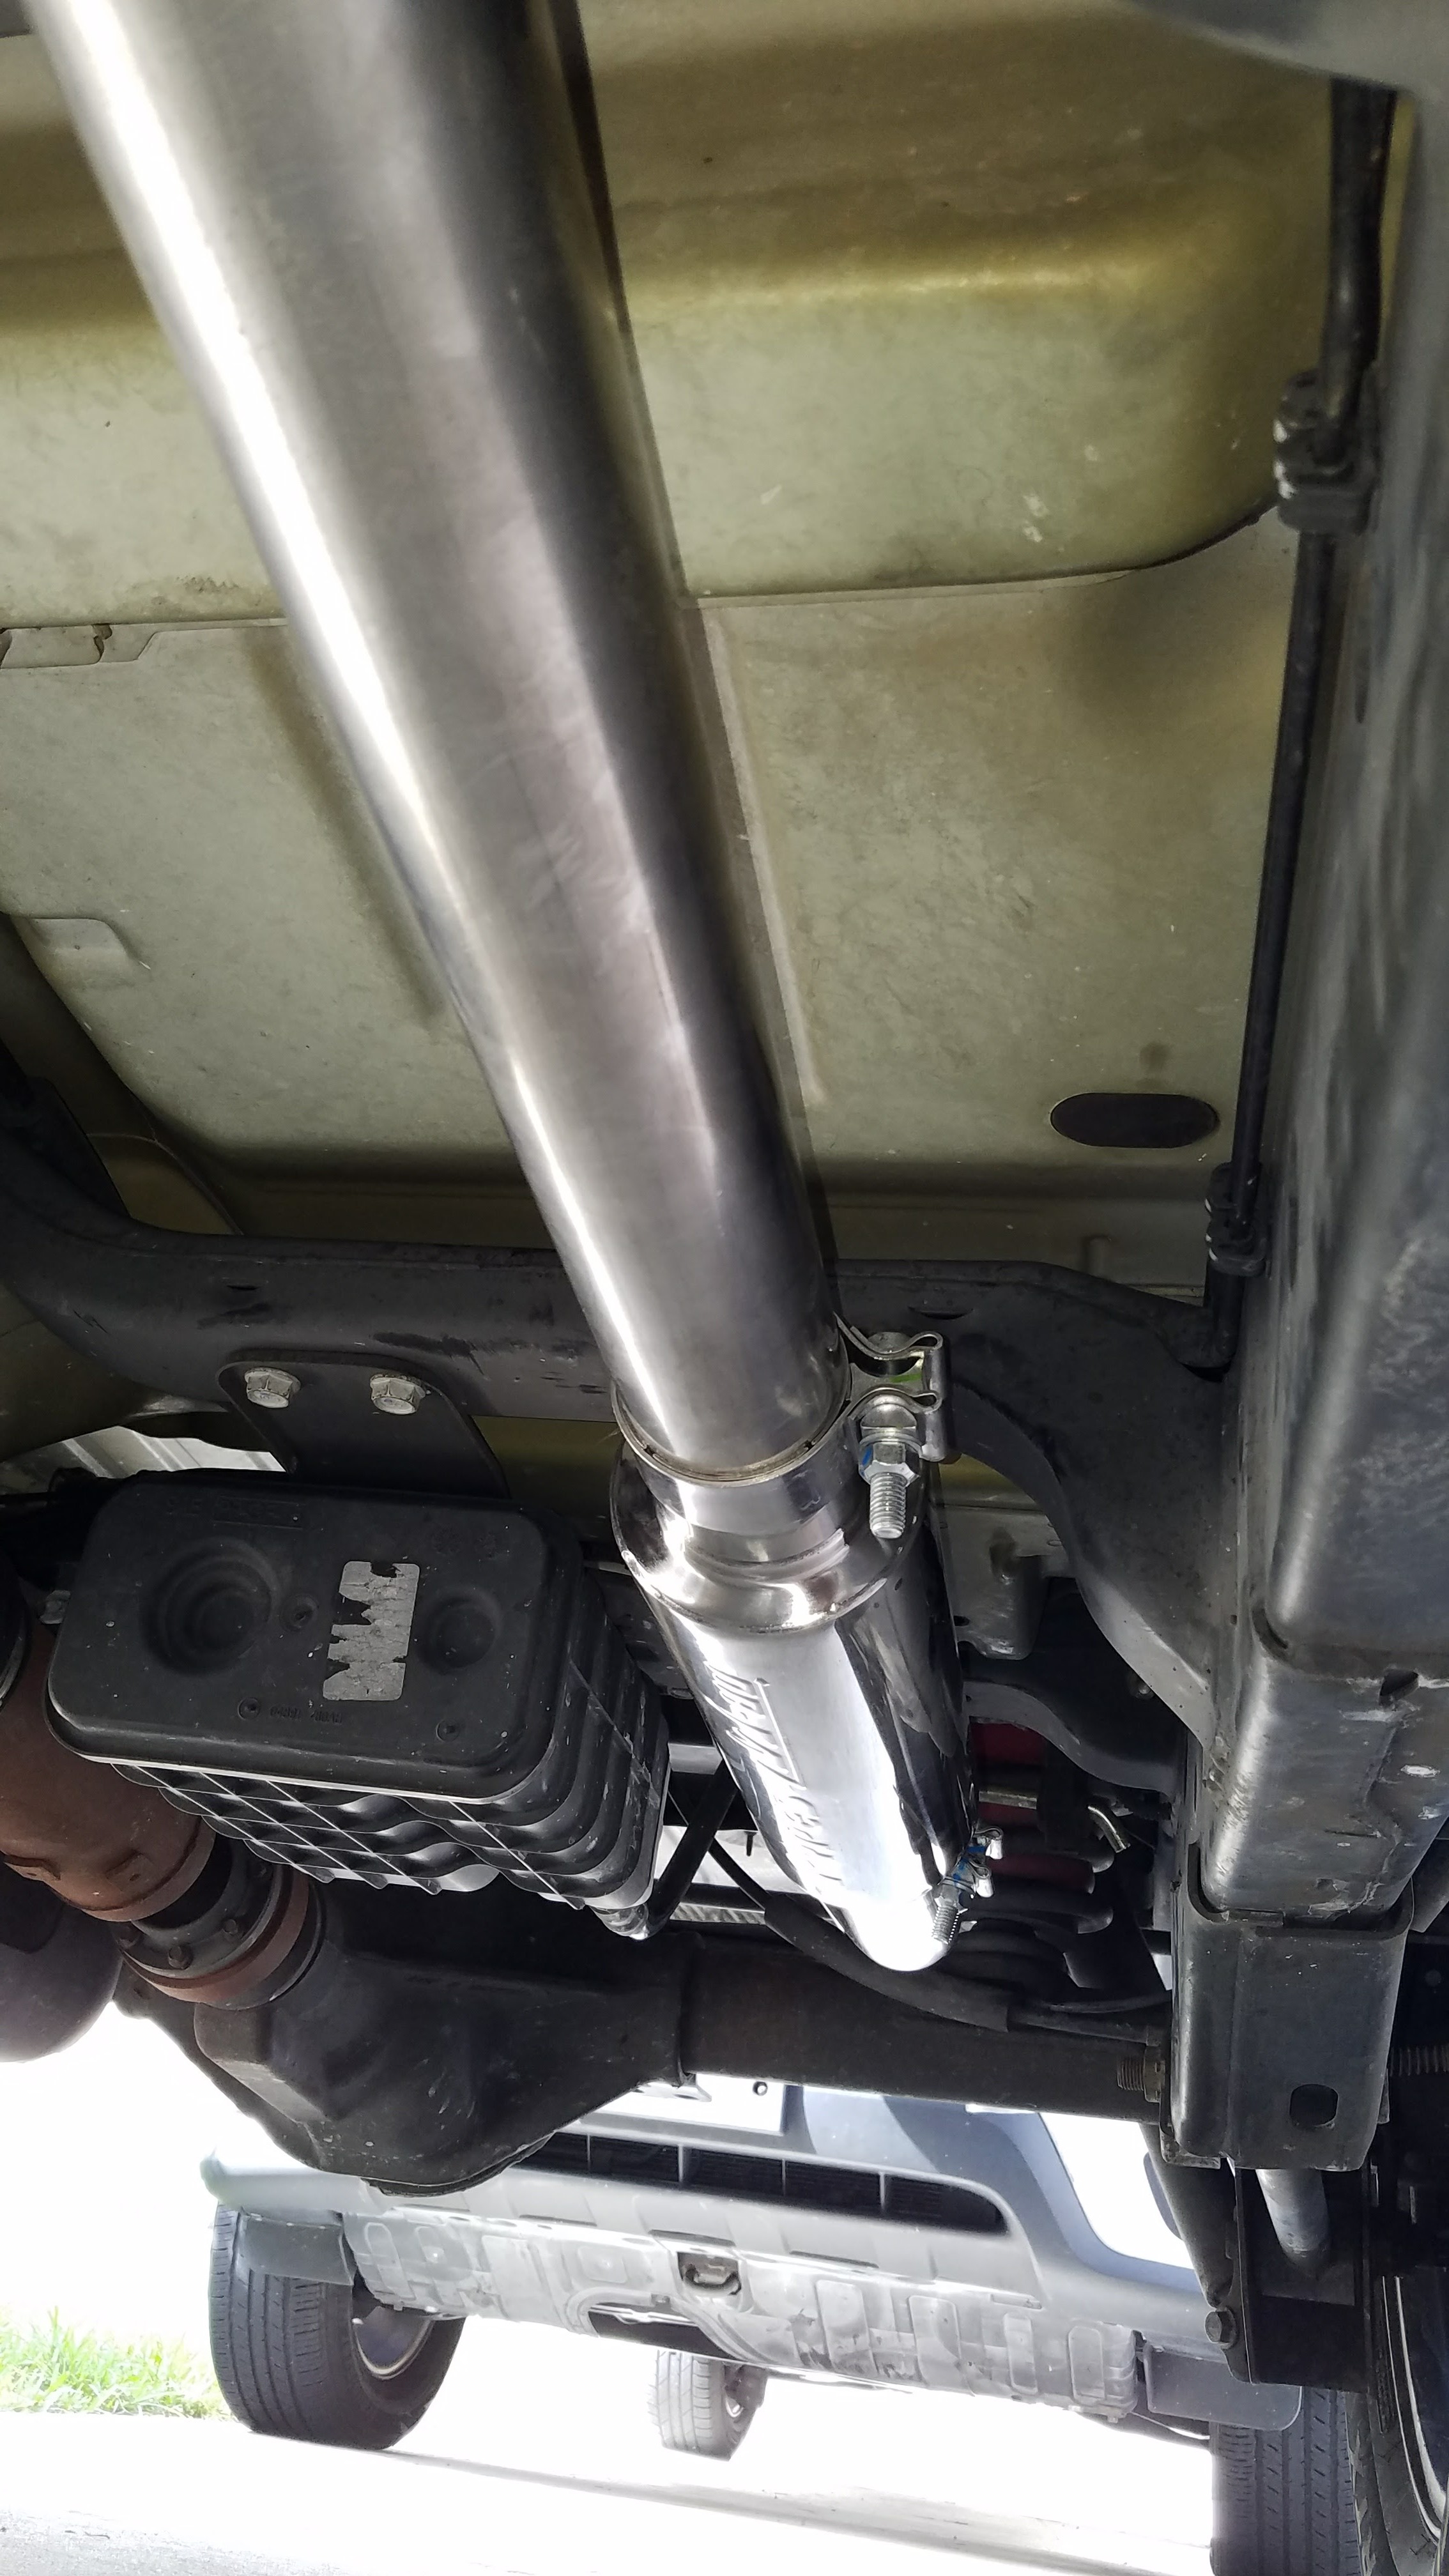  Catalytic Converters replacement | Jeep Wrangler Forum